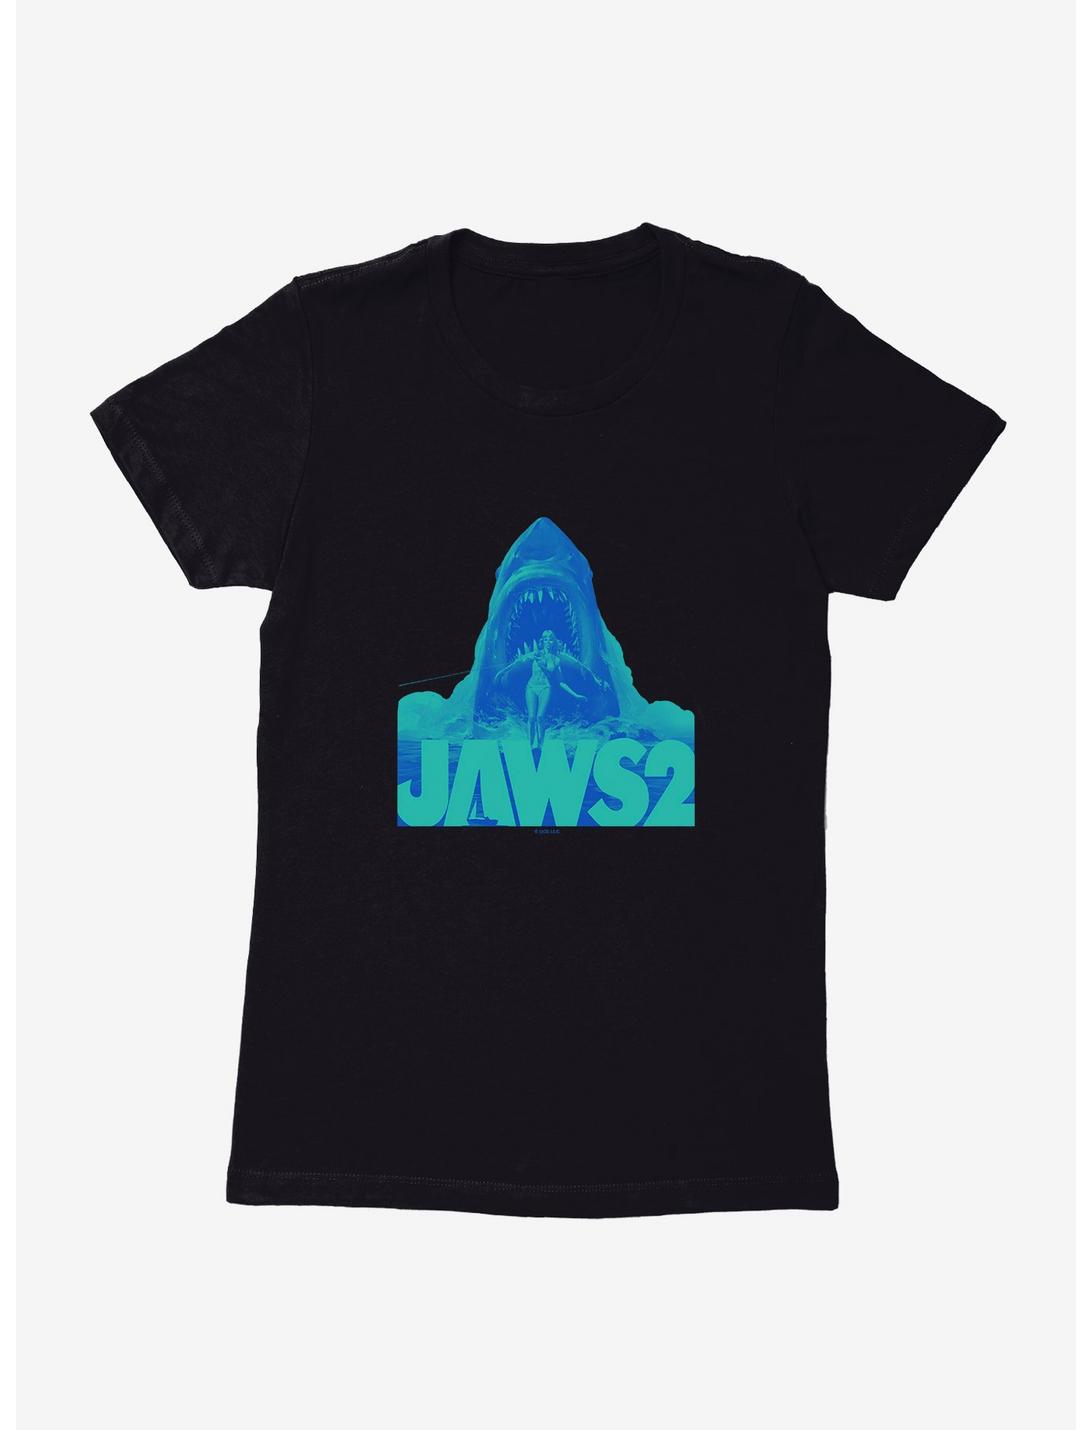 Jaws 2 Script Imagery Womens T-Shirt, BLACK, hi-res